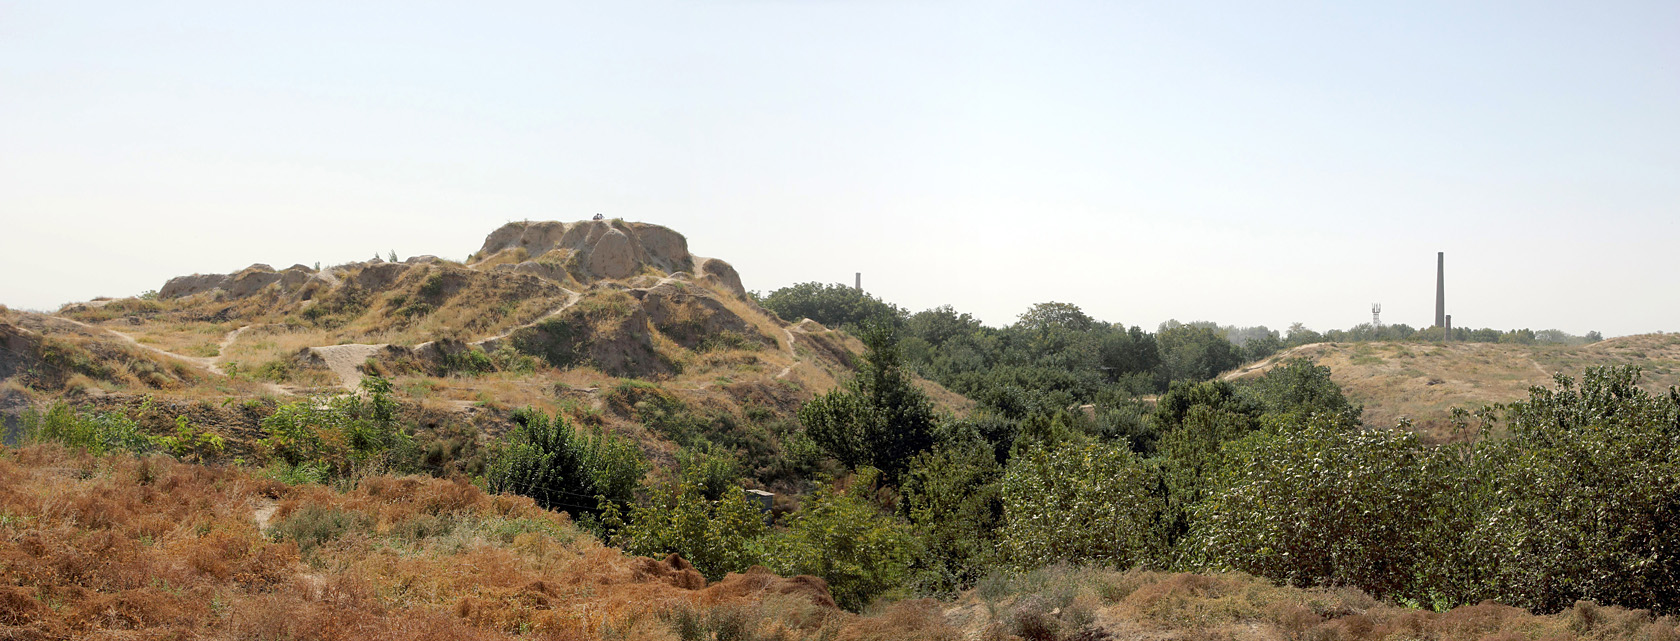 Актепа Юнусабадская, image of landscape/habitat.